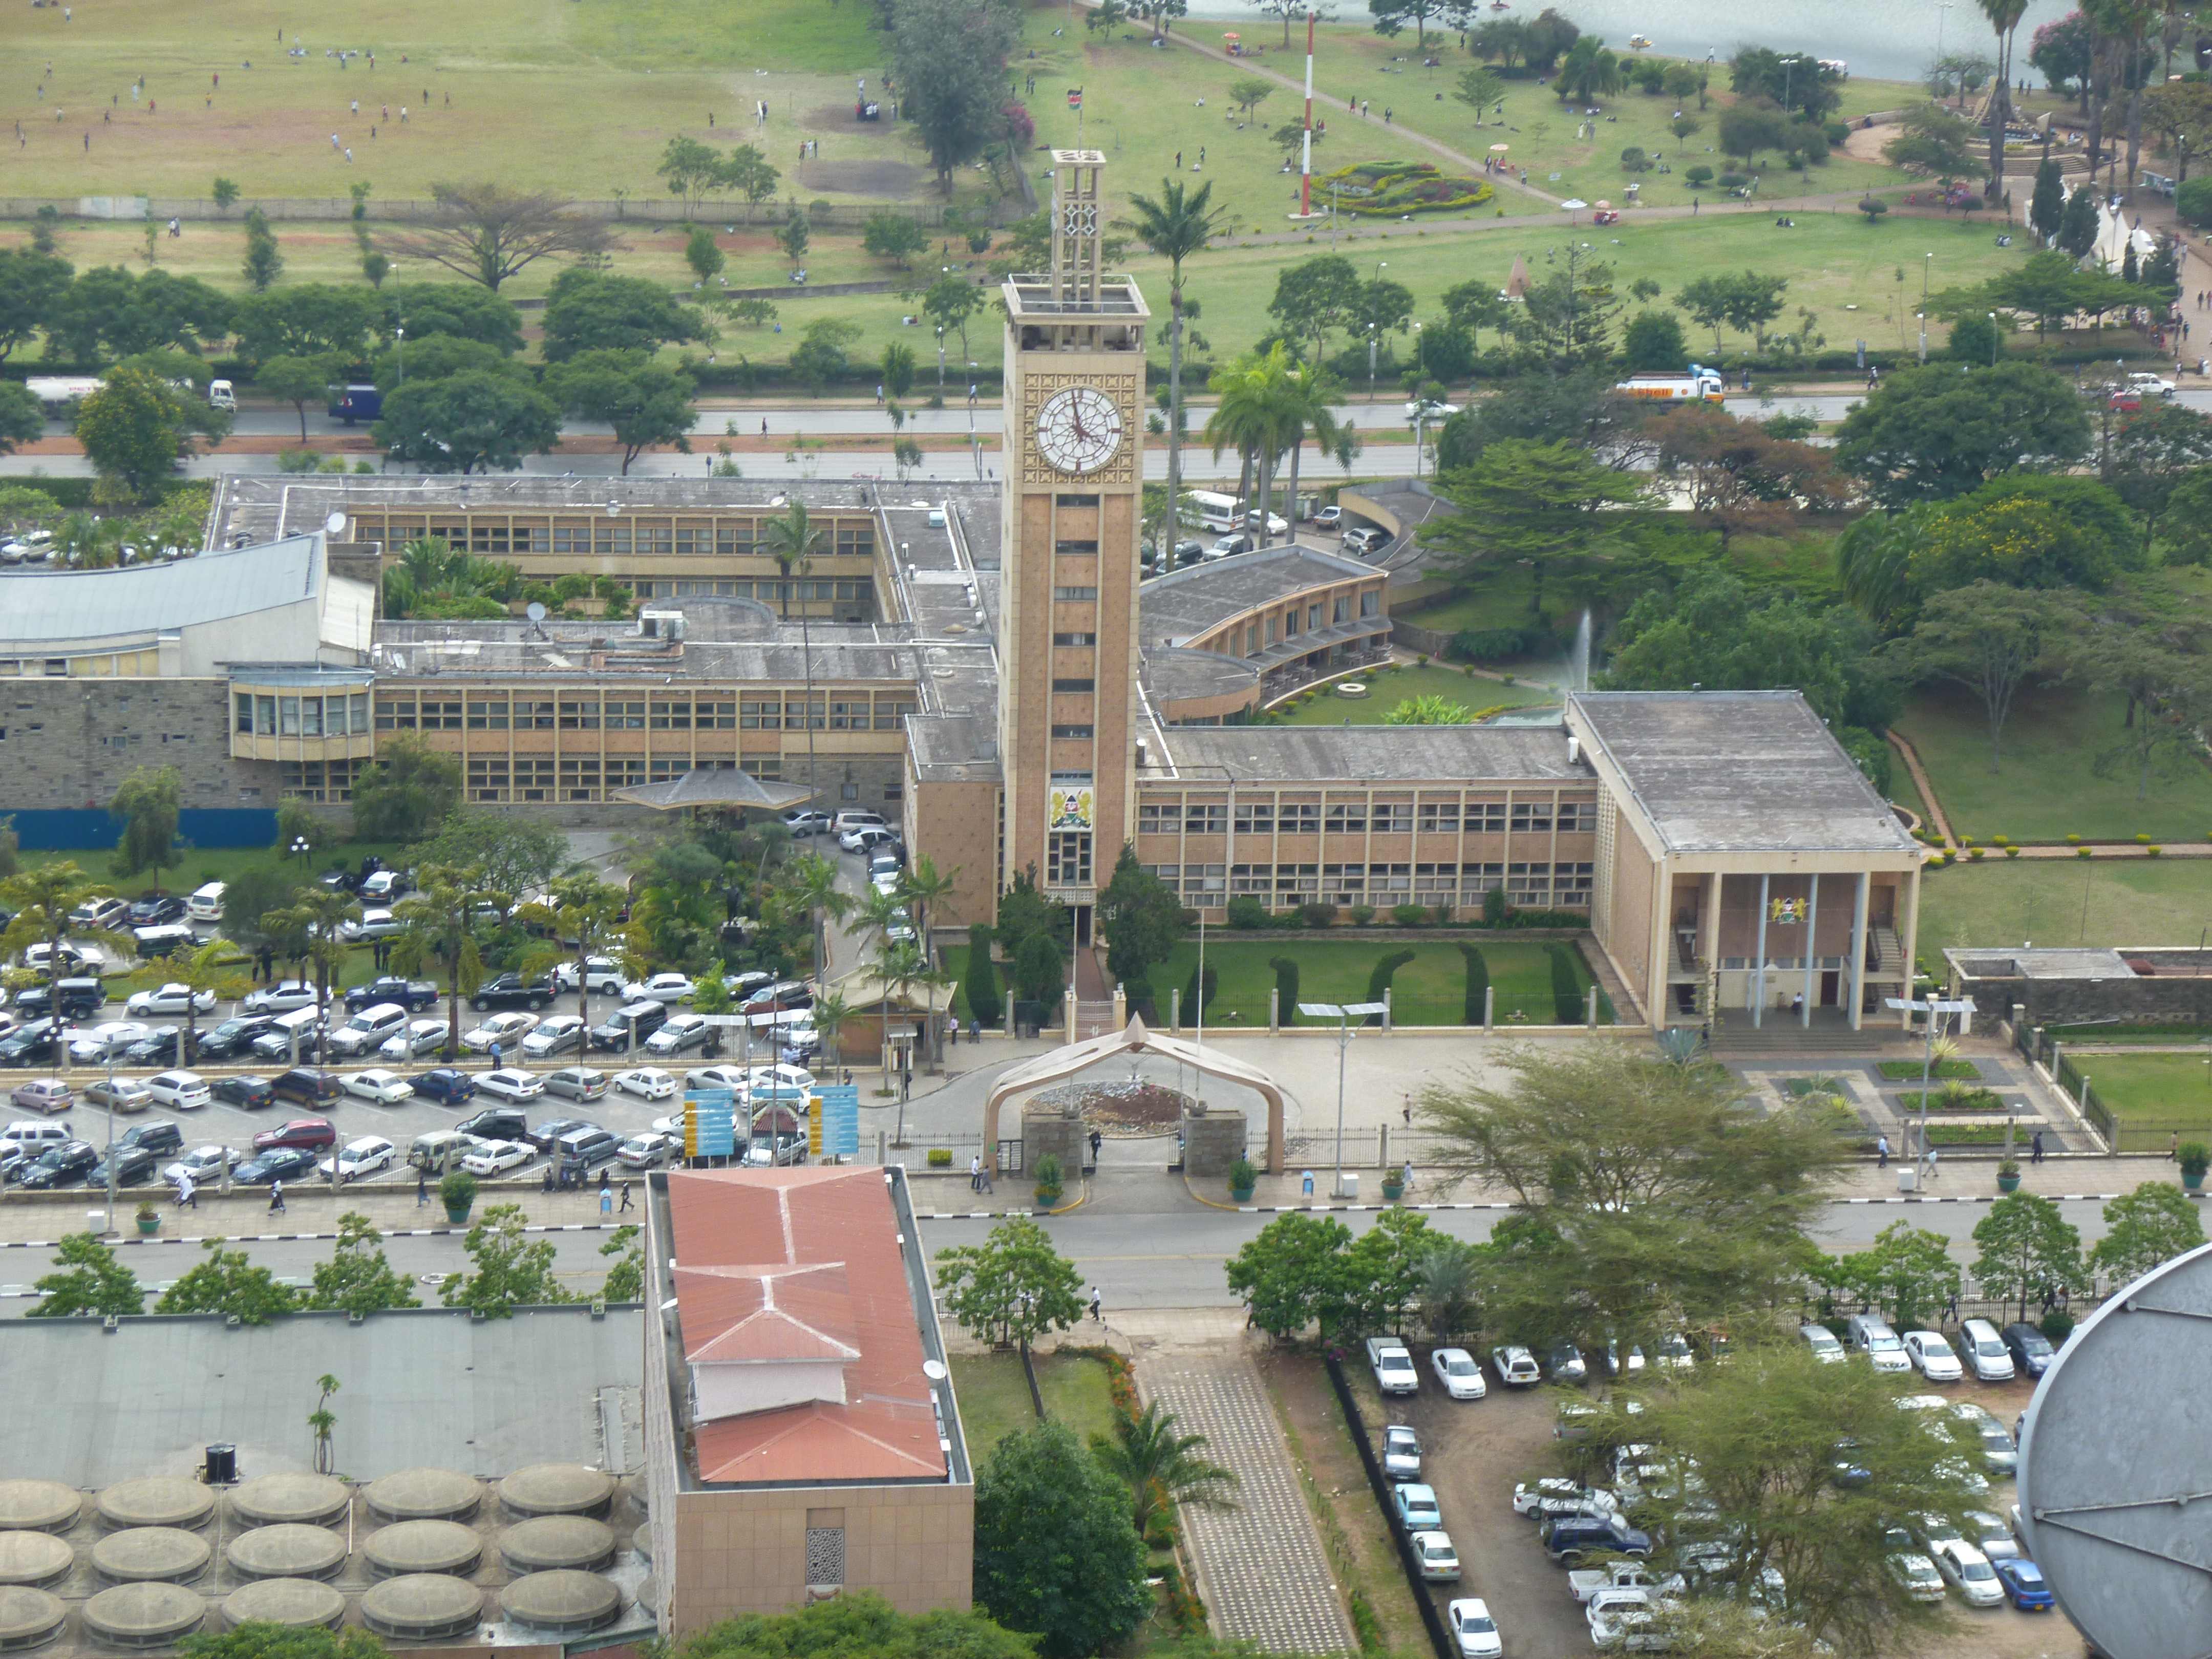 Parliament of Kenya (photo credit: Richard Portsmouth/flickr)